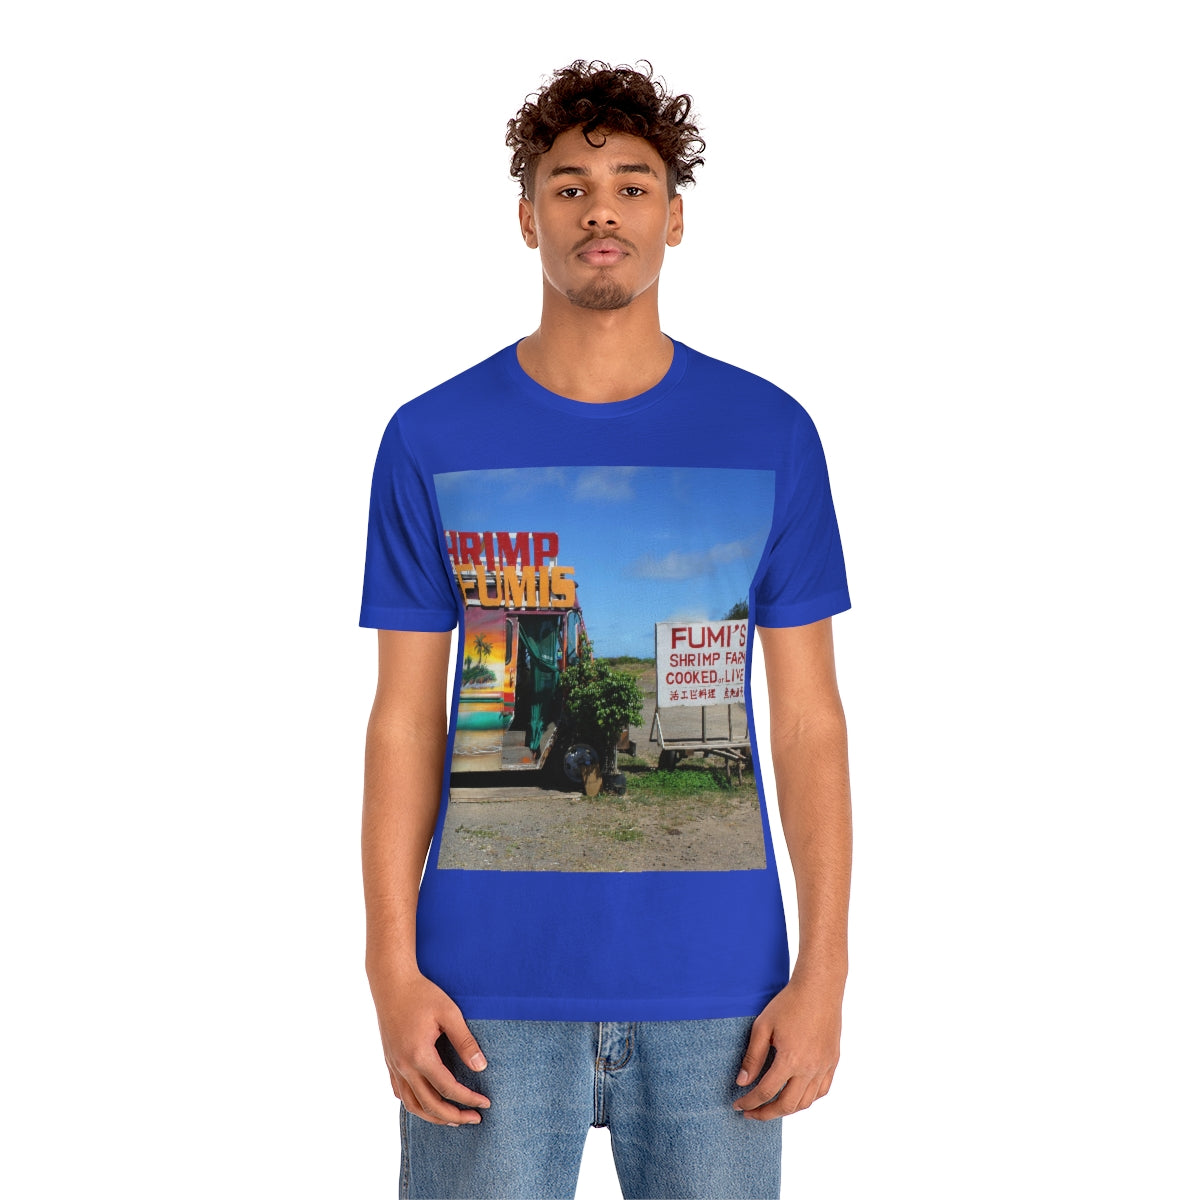 Kaulana Delights - Unisex Jersey Short Sleeve T-Shirt - Fry1Productions